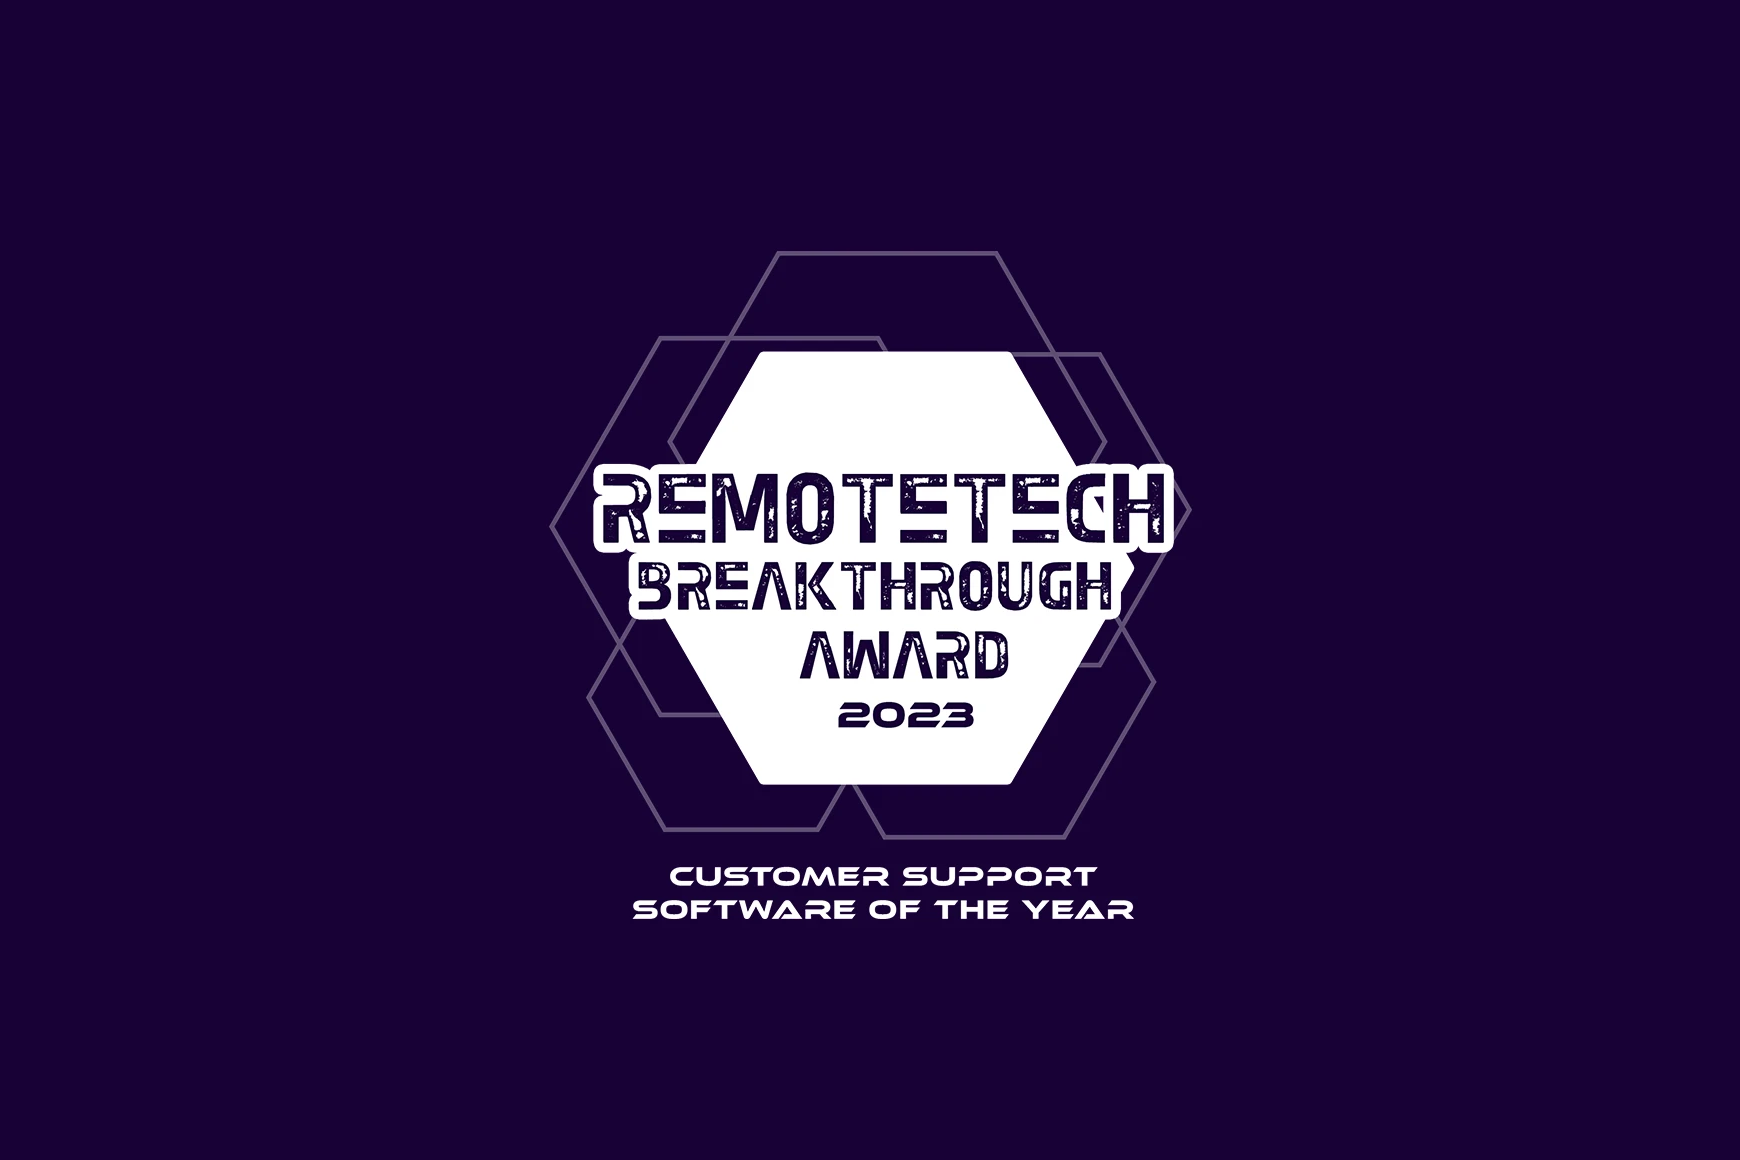 Talkdesk Financial Services Experience Cloud gewinnt den Remotetech Breakthrough Award 2023